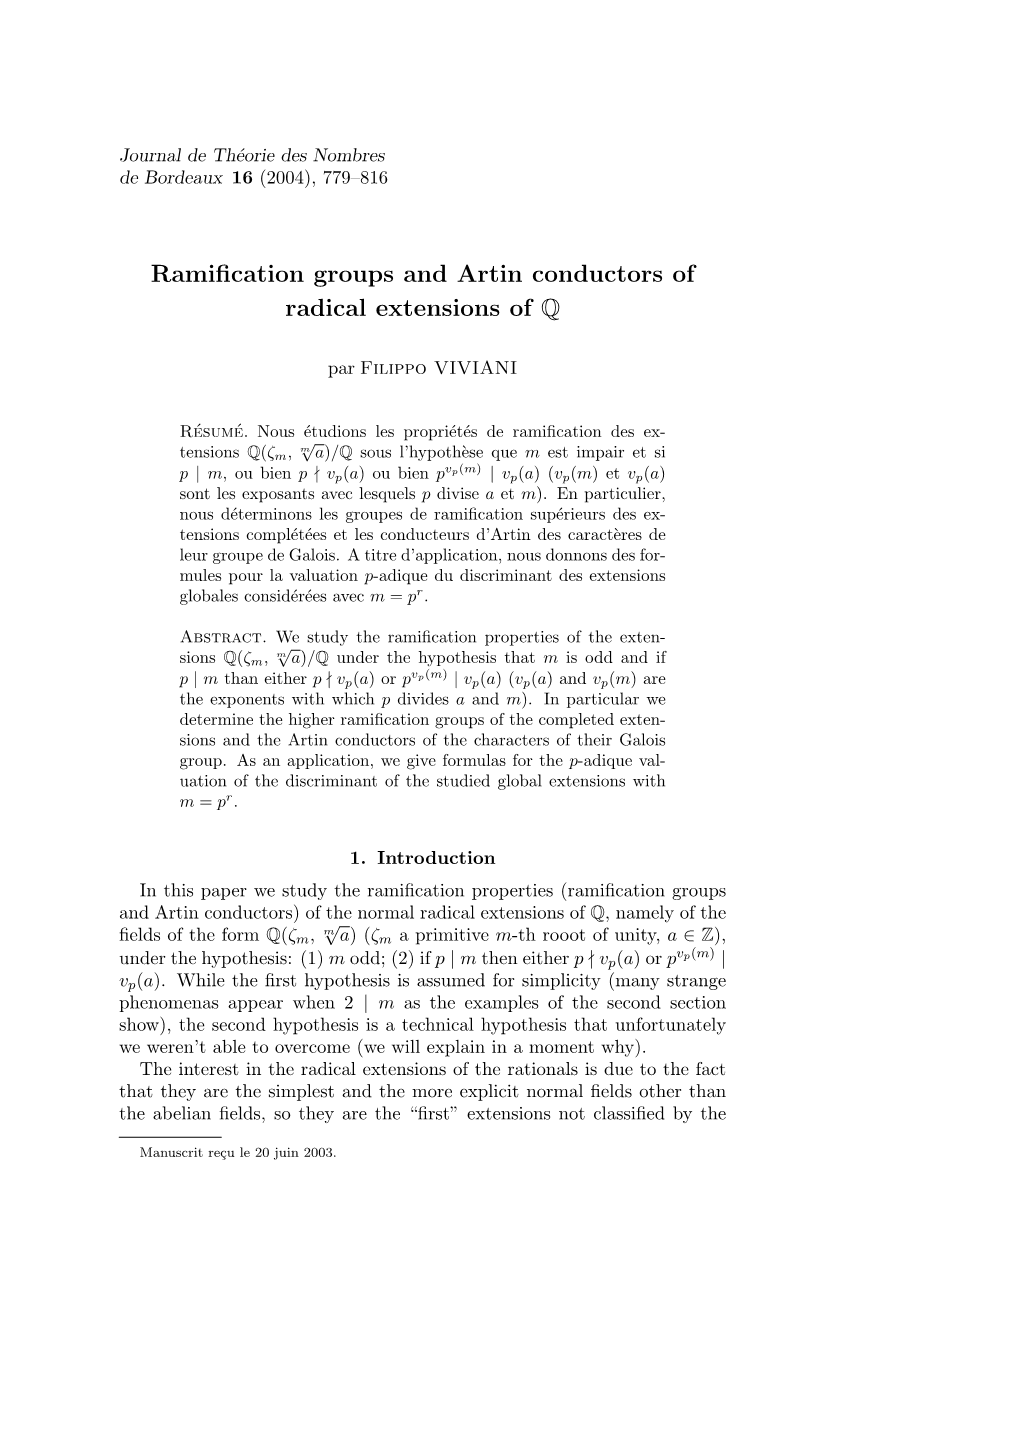 Ramification Groups and Artin Conductors of Radical